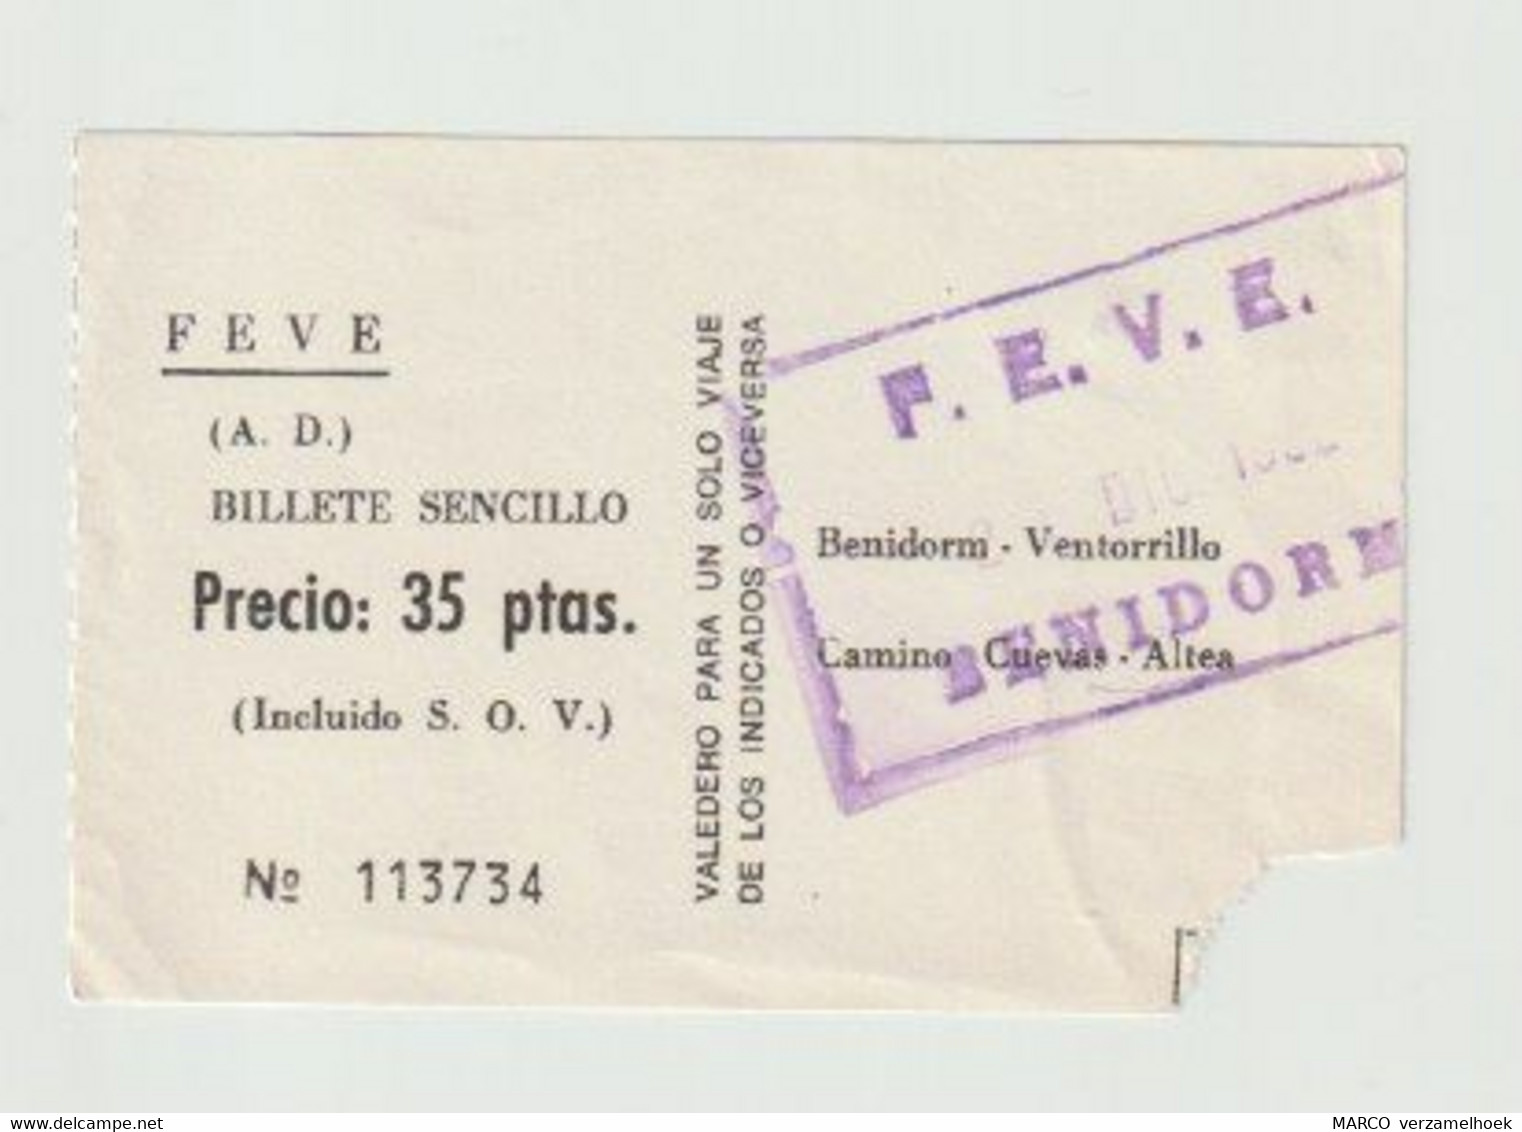 Carte D'entrée-toegangskaart-ticket: metro-bus Bilette Sencillo Benidorm-ventorillo-camino Cuevas-altea (E) - Europe